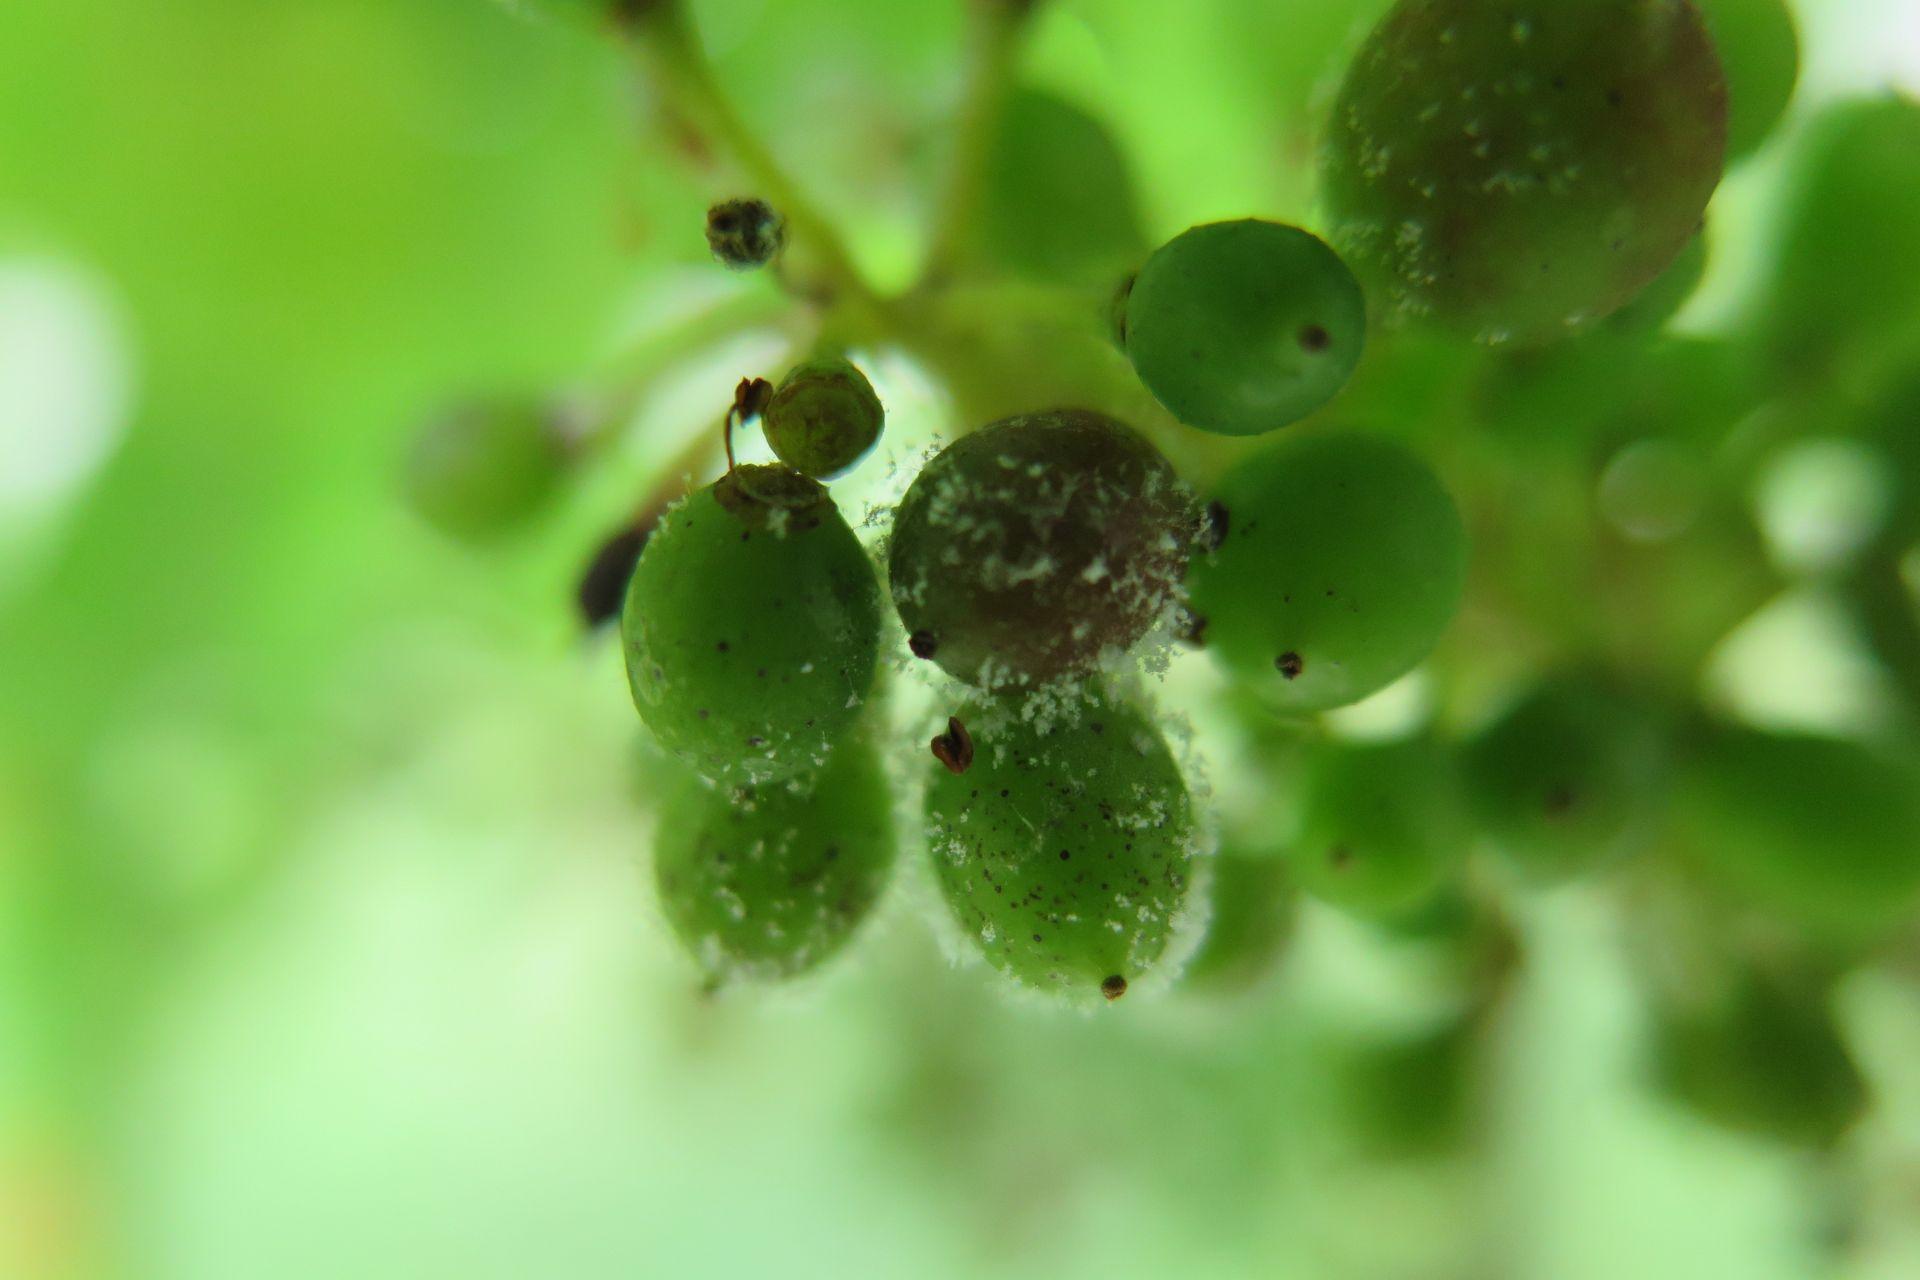 Peronospora-della-Vite-acini-grappolo-grapes-bunch-of-grapes-Downy-Mildew-of-Grapevines-BioAksxter-Magazine-Copyright.jpg